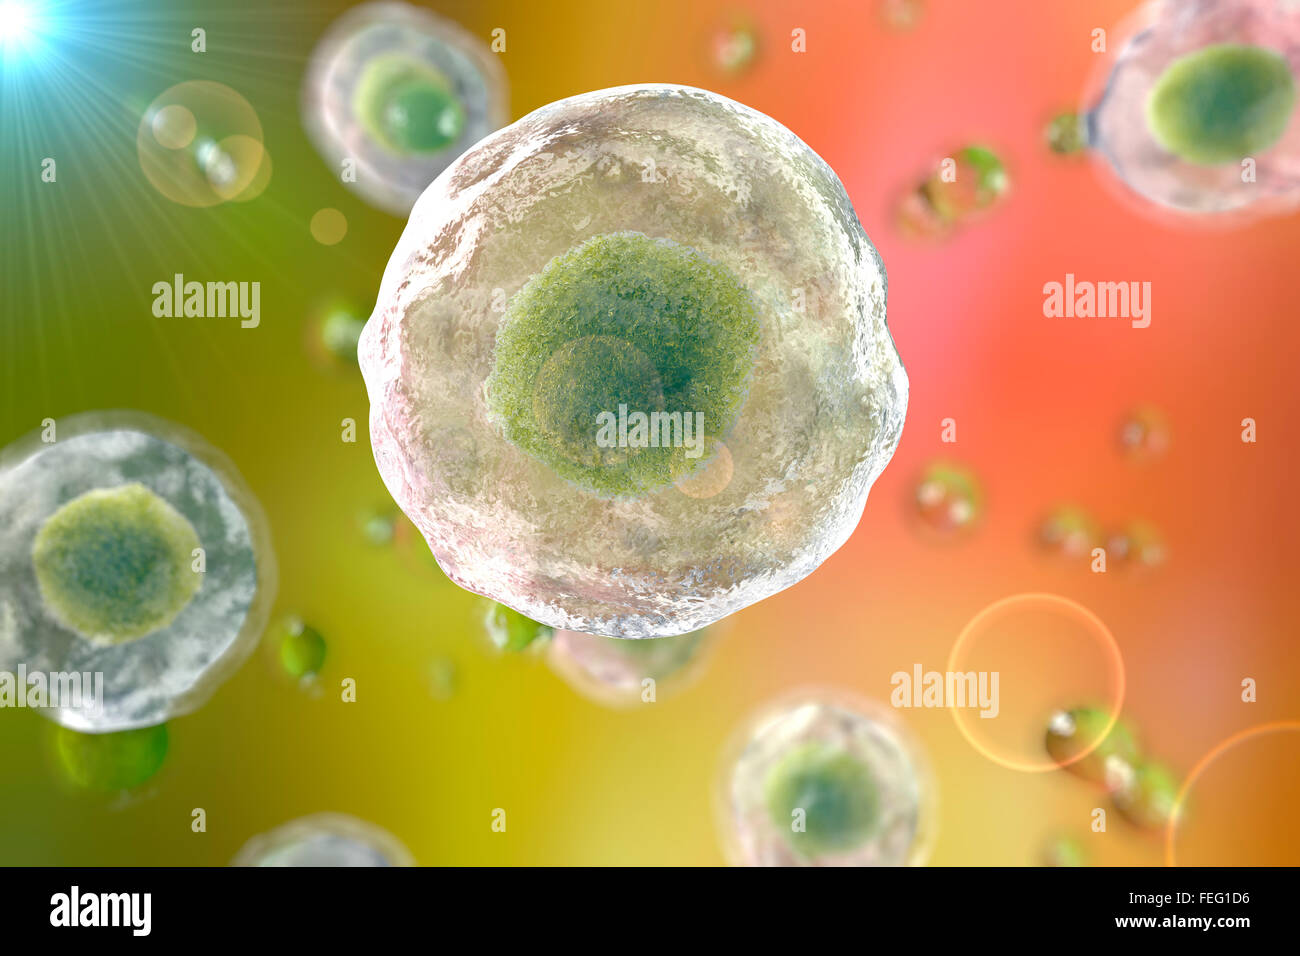 Human cells, computer illustration Stock Photo